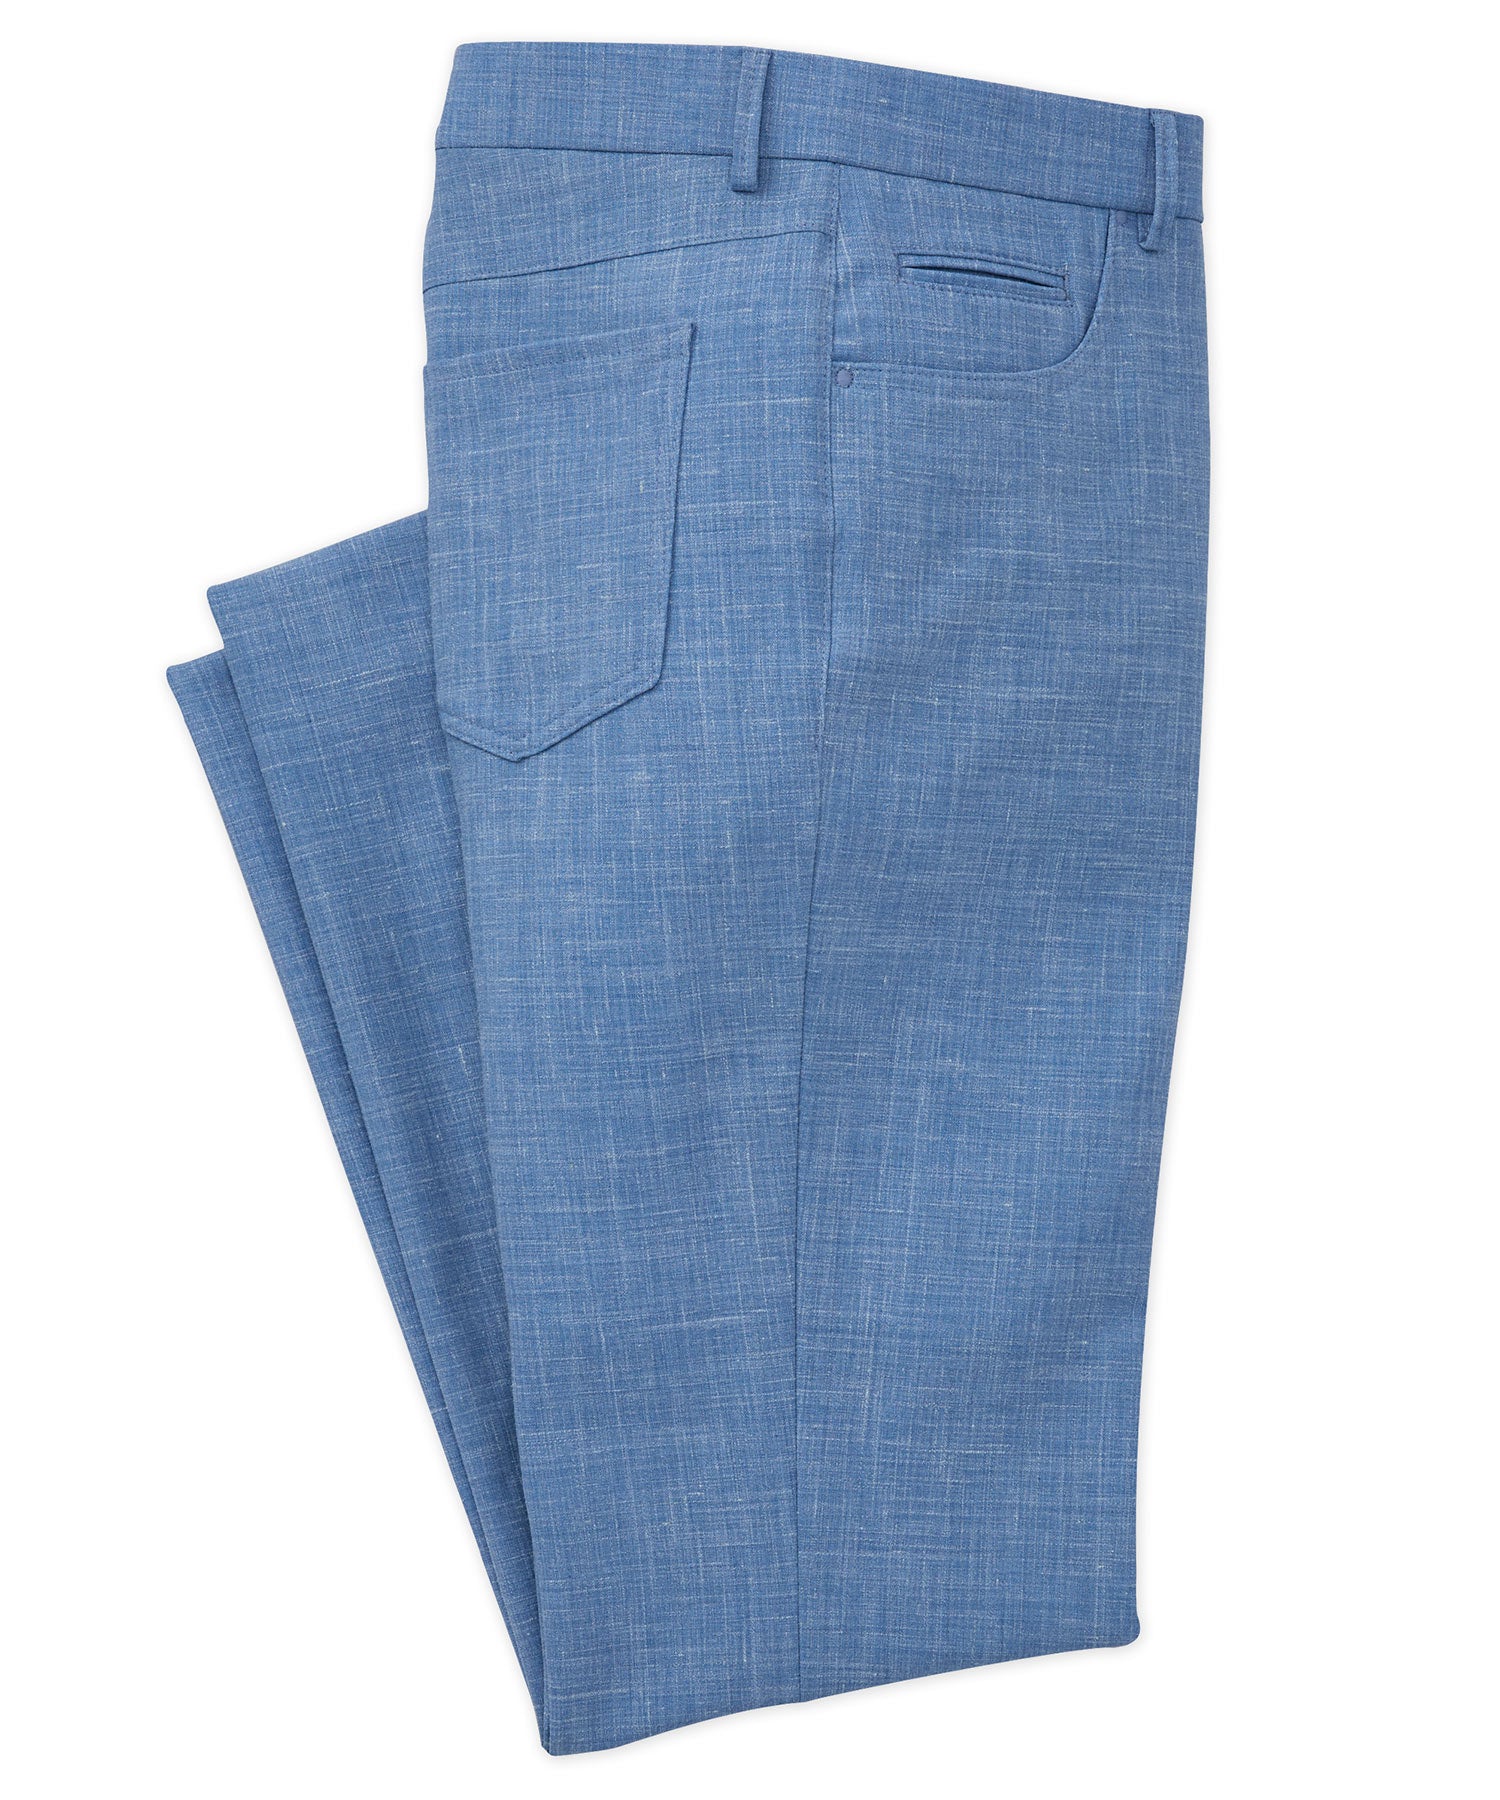 Westport Black Micro Donegal Stretch Five Pocket Linen Pant, Men's Big & Tall